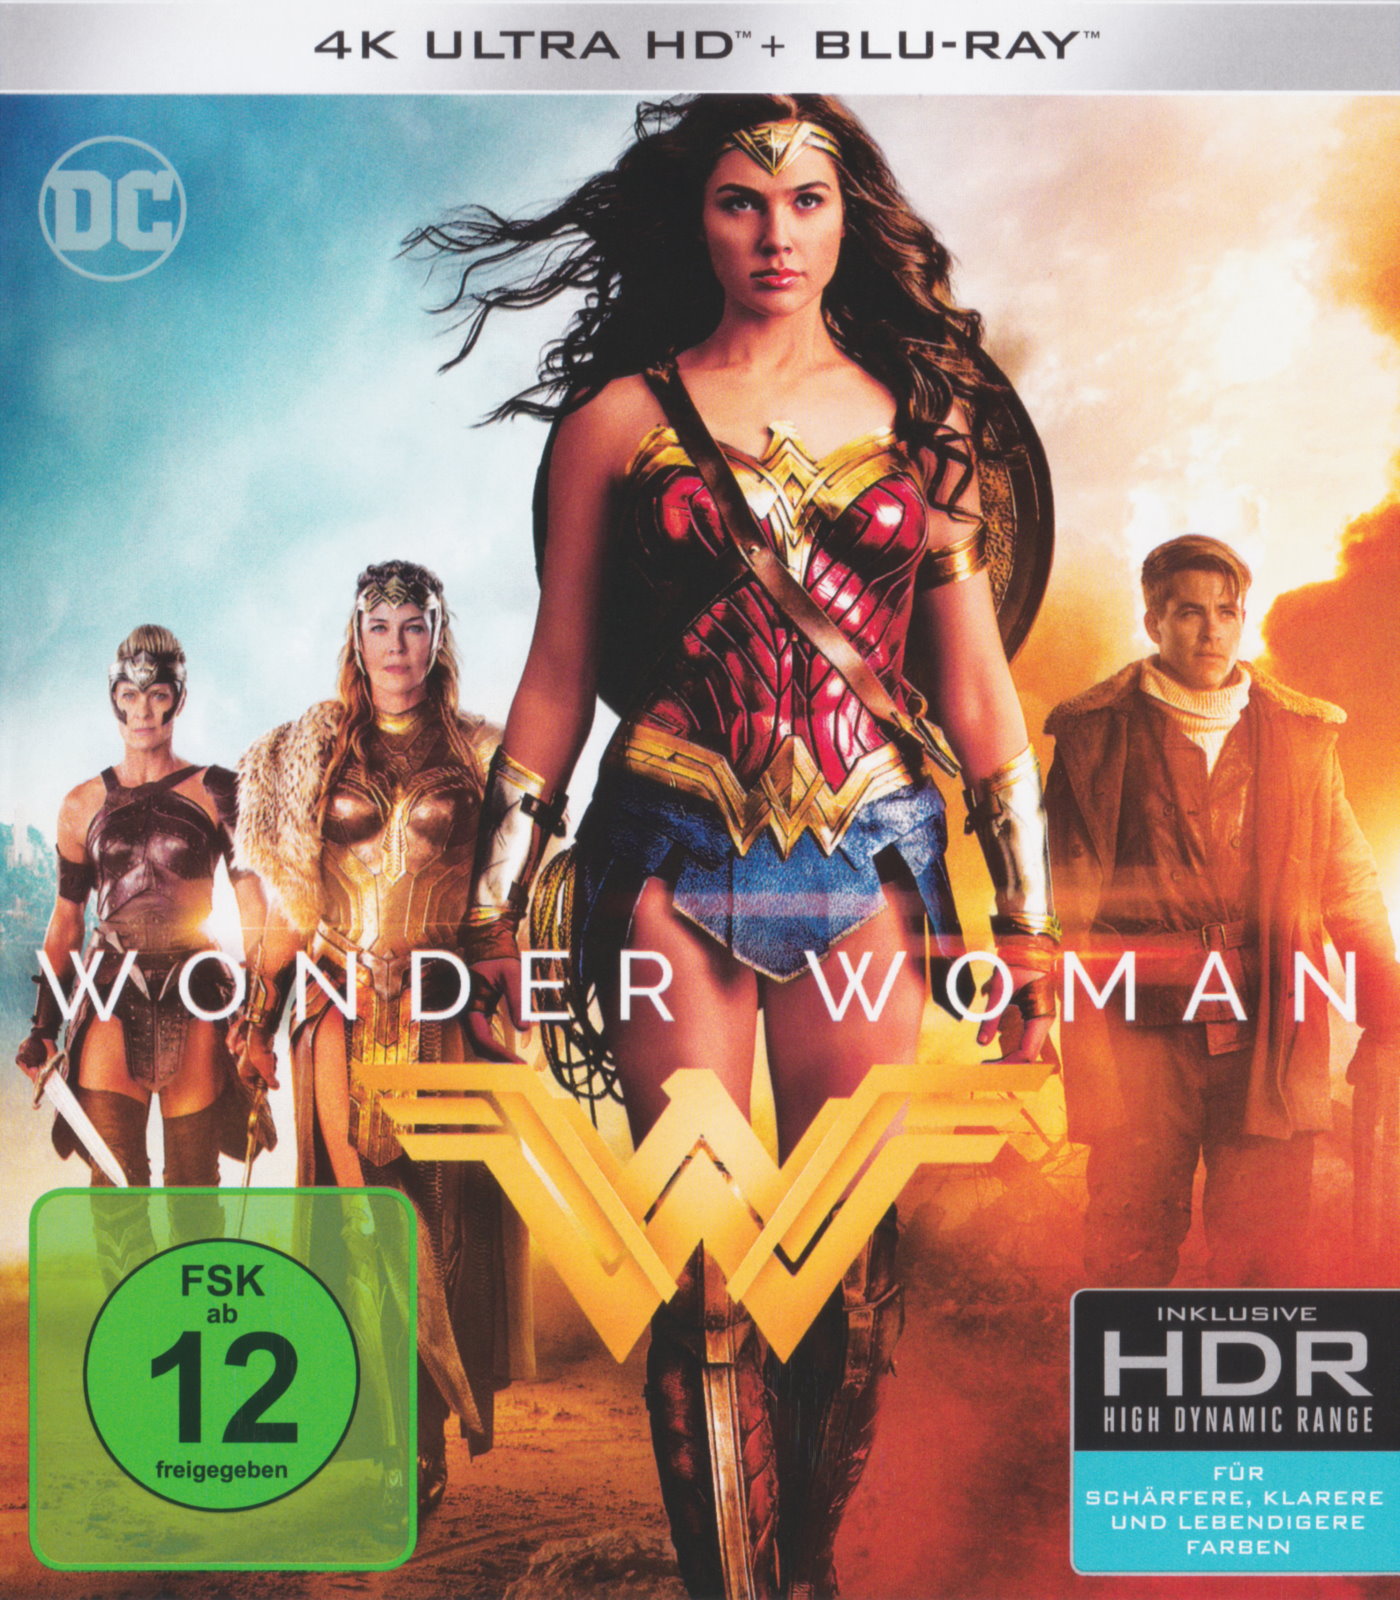 Cover - Wonder Woman.jpg